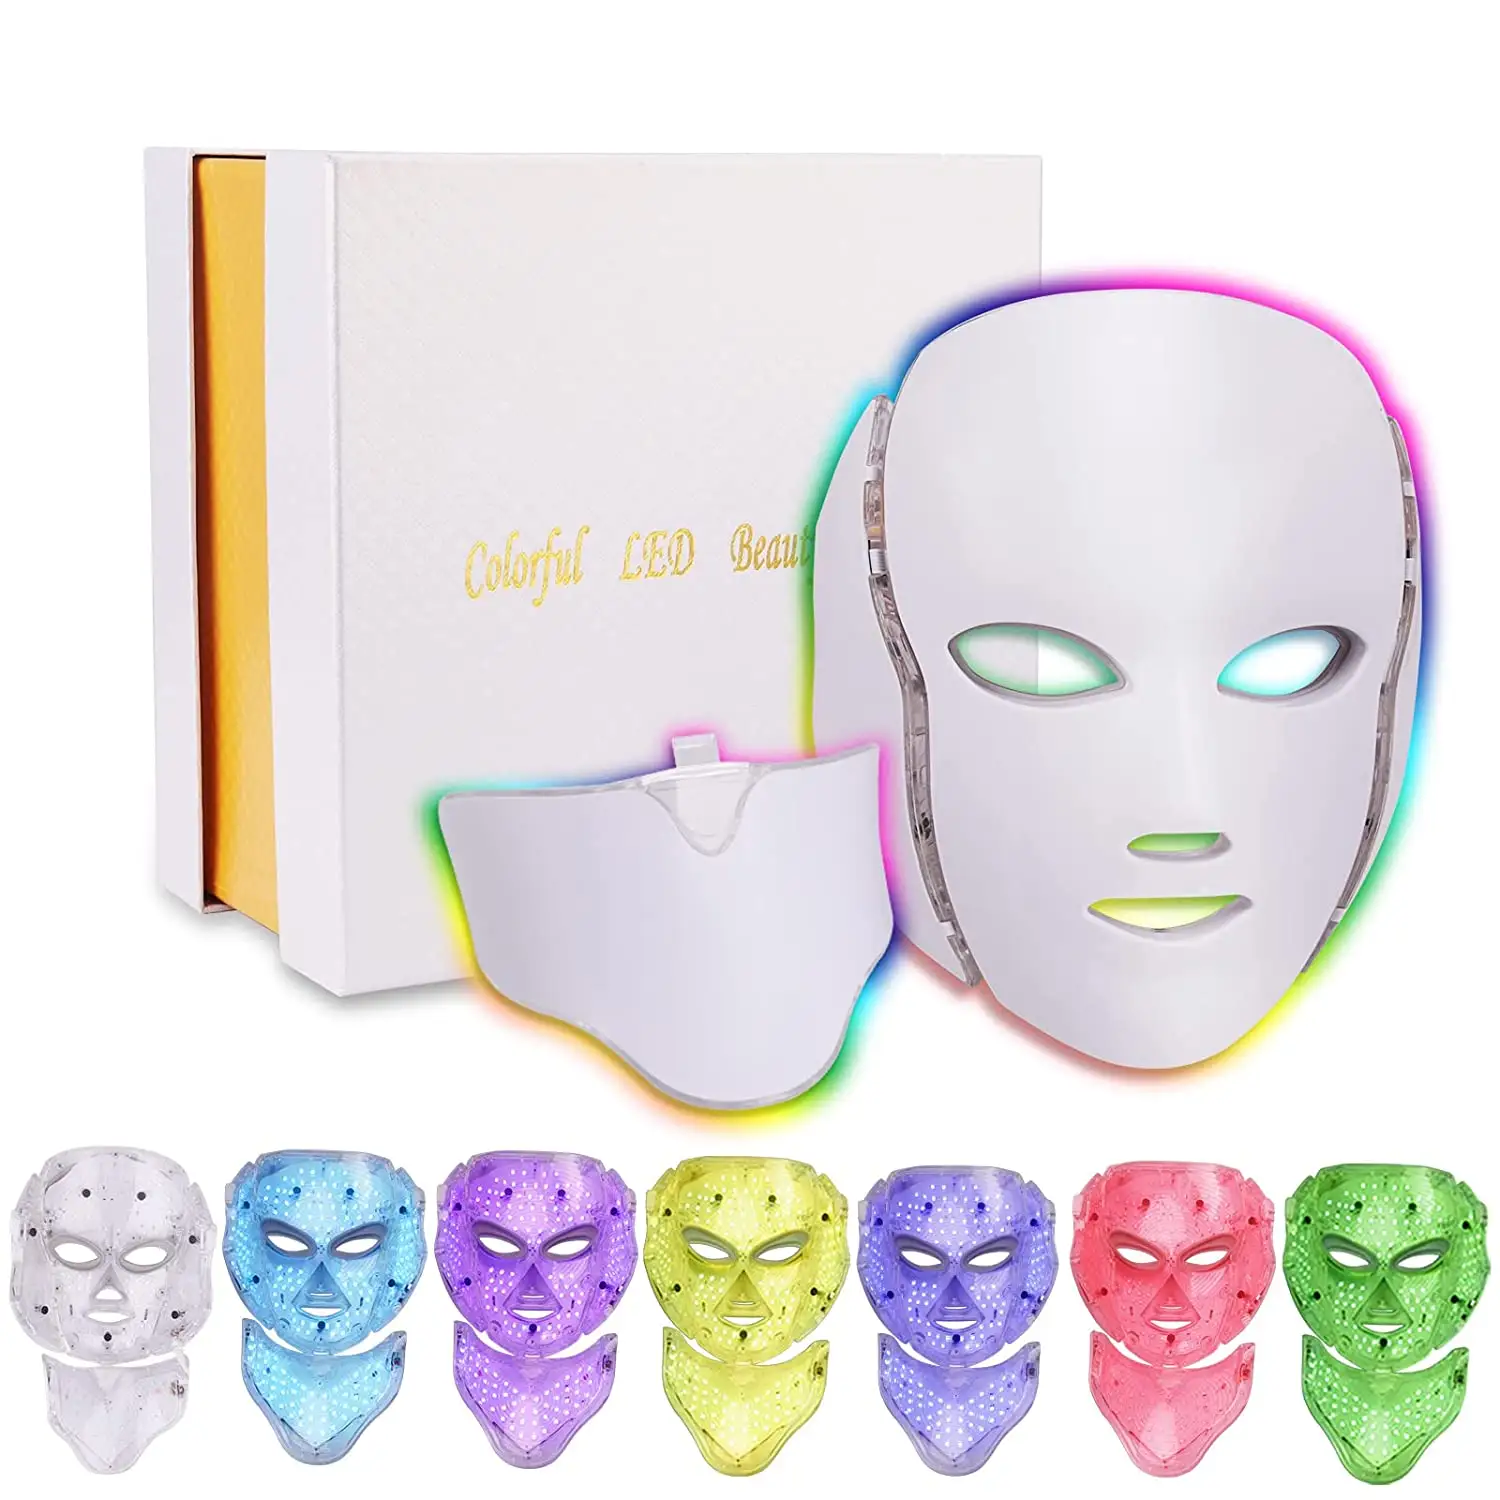 Beleza 7 cores LED máscara rosto pescoço Photon luz pele rejuvenescimento luz cuidados faciais instrumento anti envelhecimento